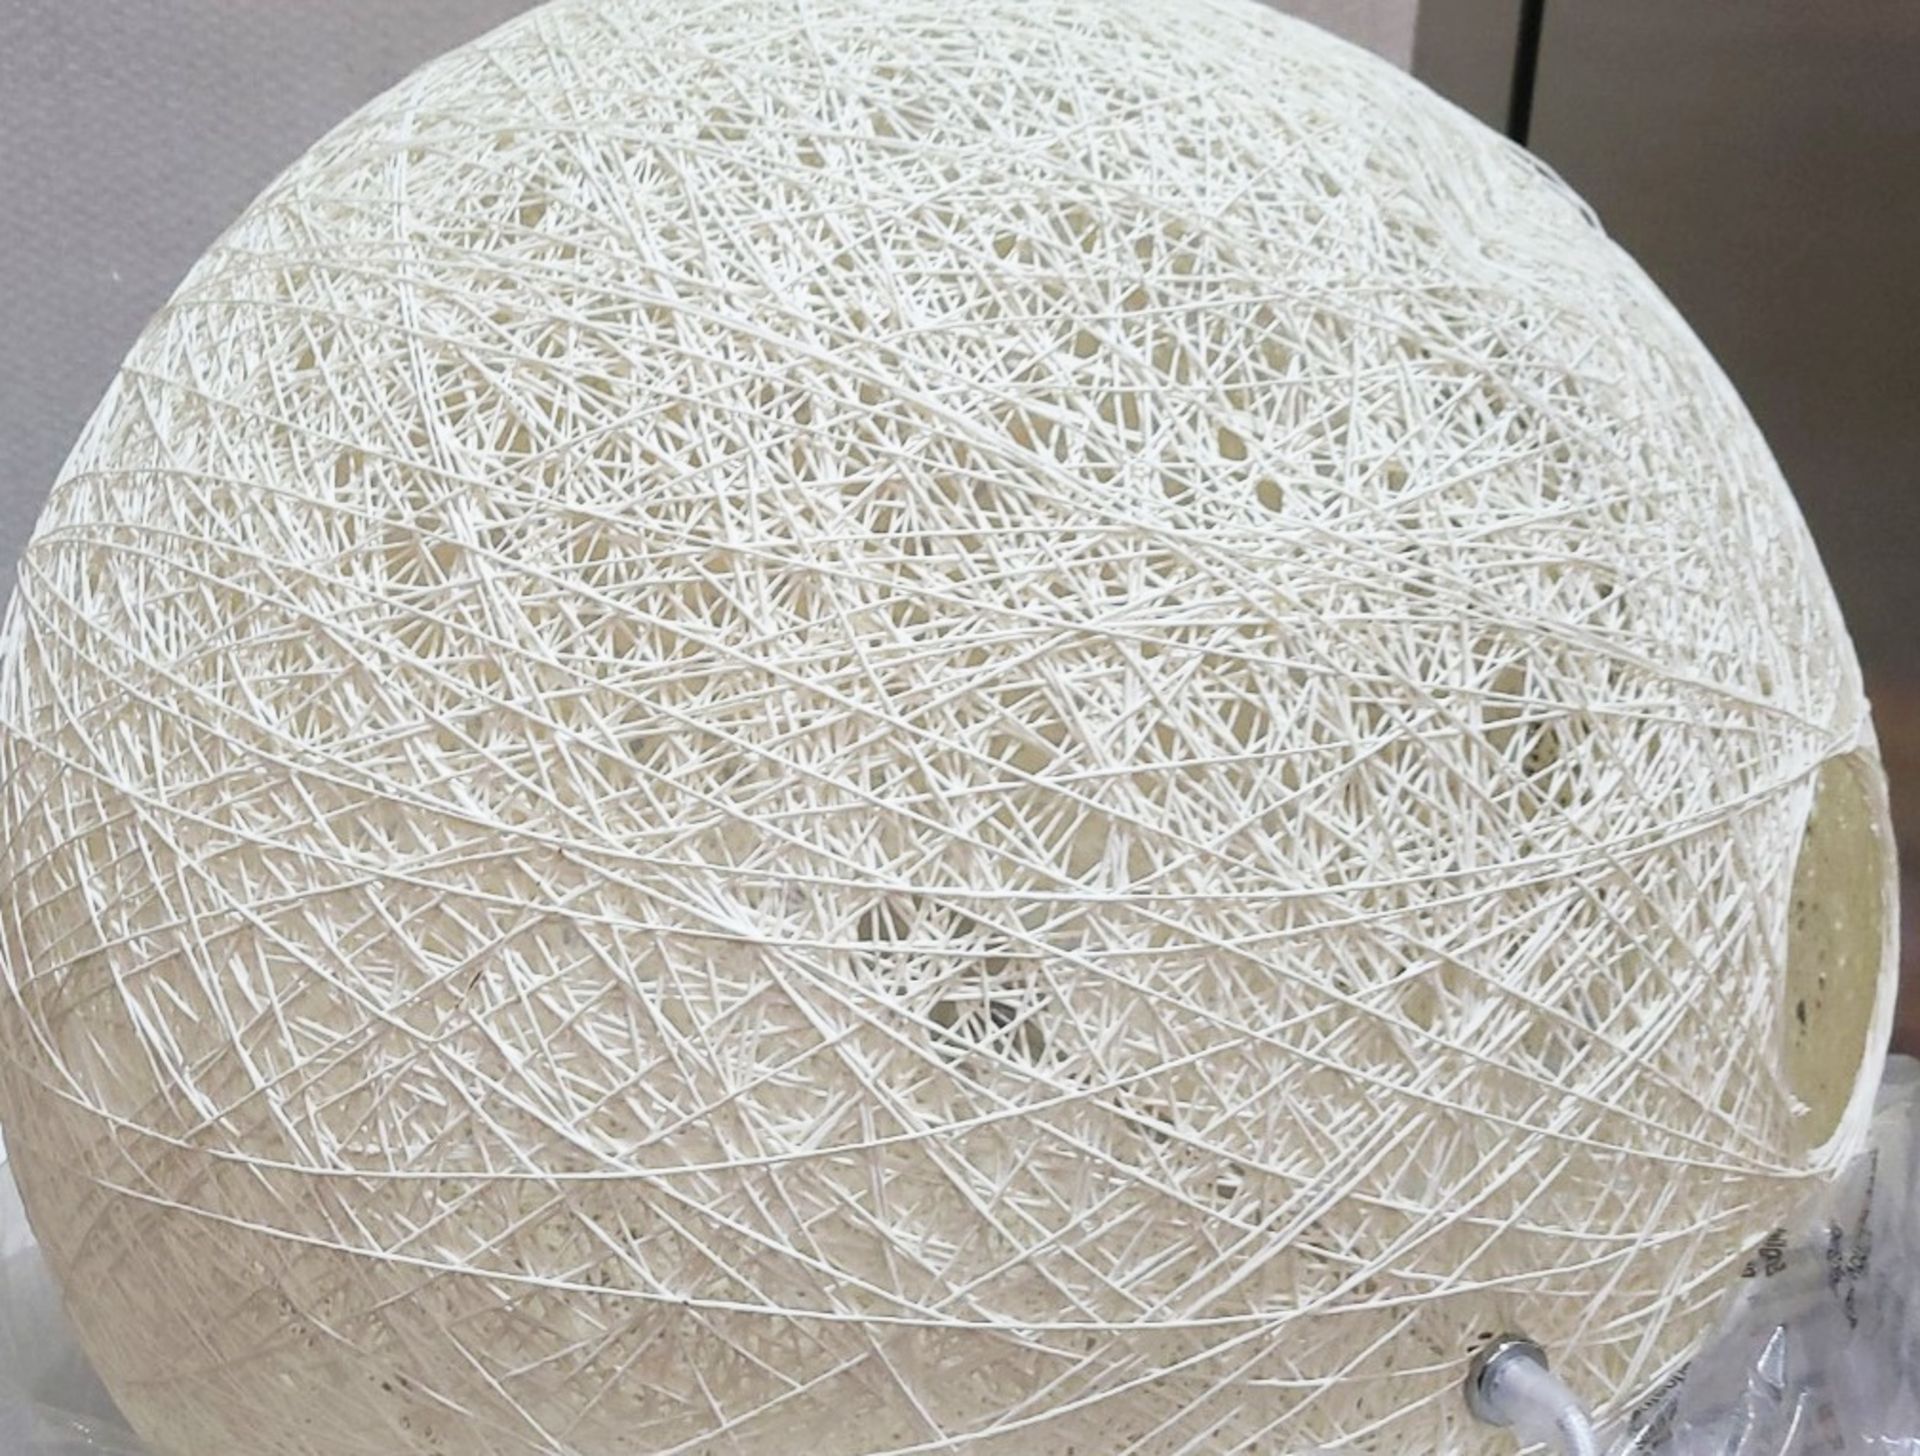 1 x BLUESUNTREE Elegant 58cm Off White Woven String Resin Nest Ball Pendant Lamp Wired For Mains - Image 2 of 6